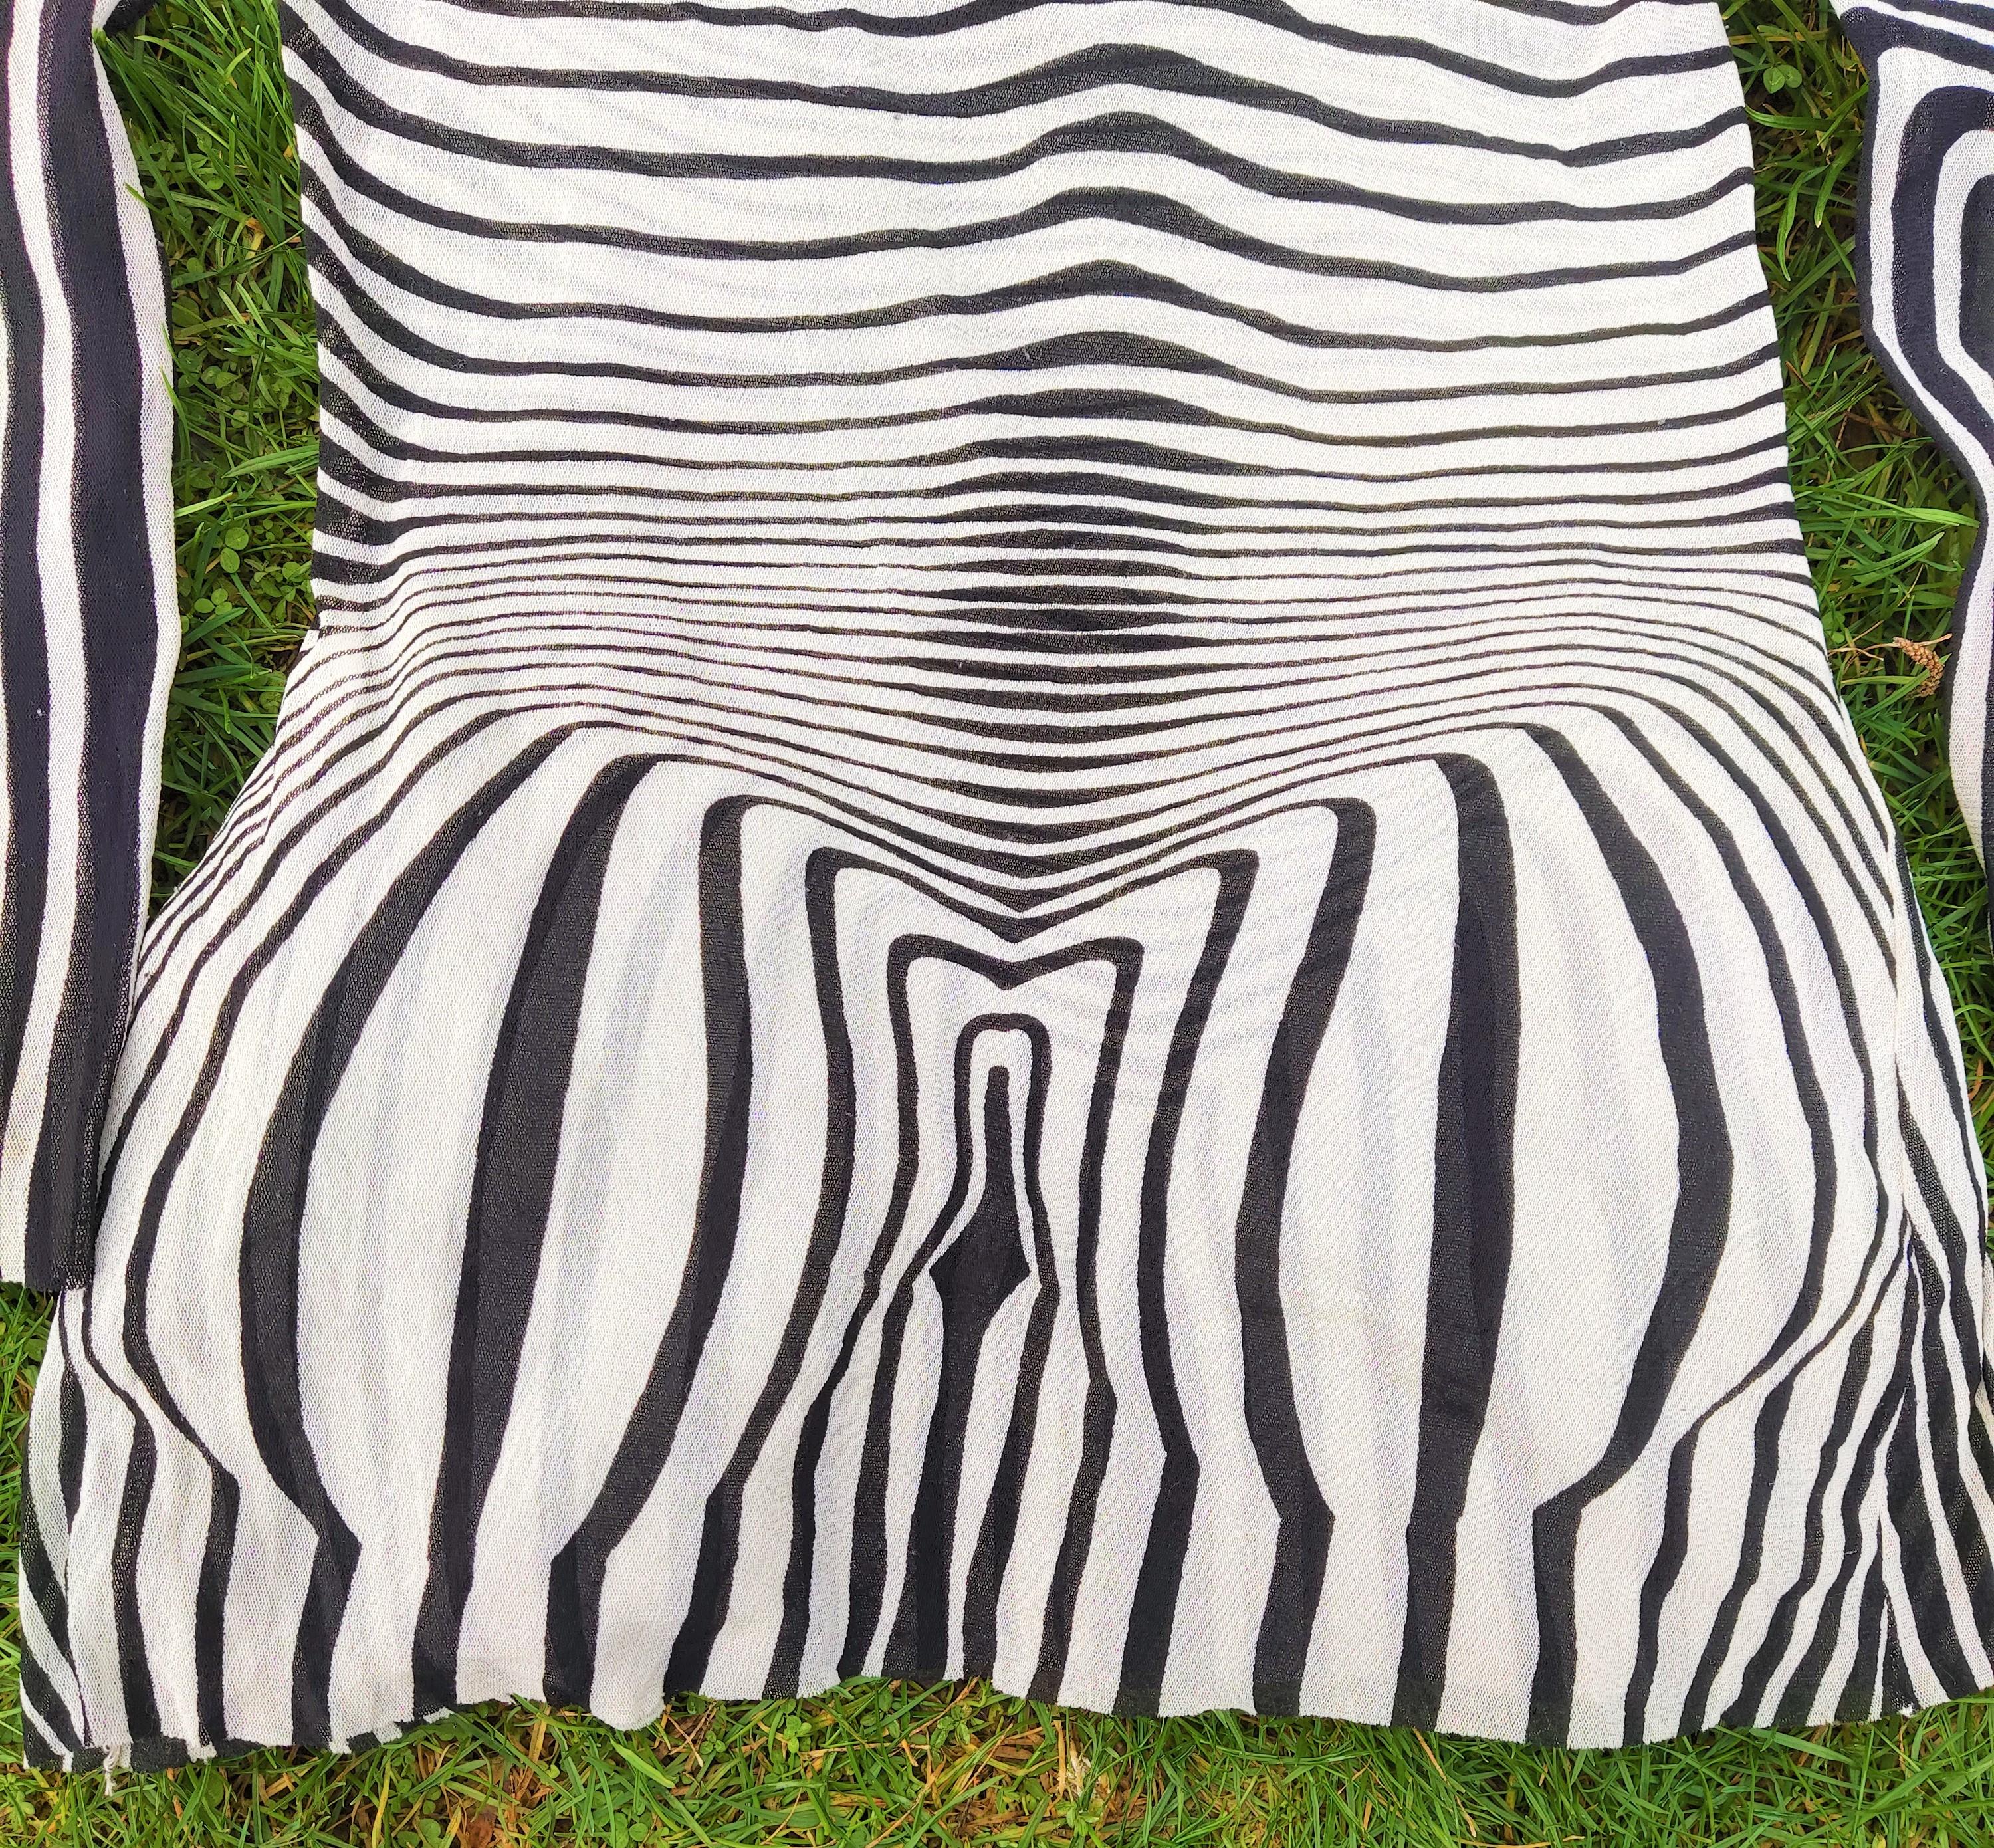 Jean Paul Gaultier Cyberbaba Zebra Optical Illusion Striped Transparent Mesh Top 7